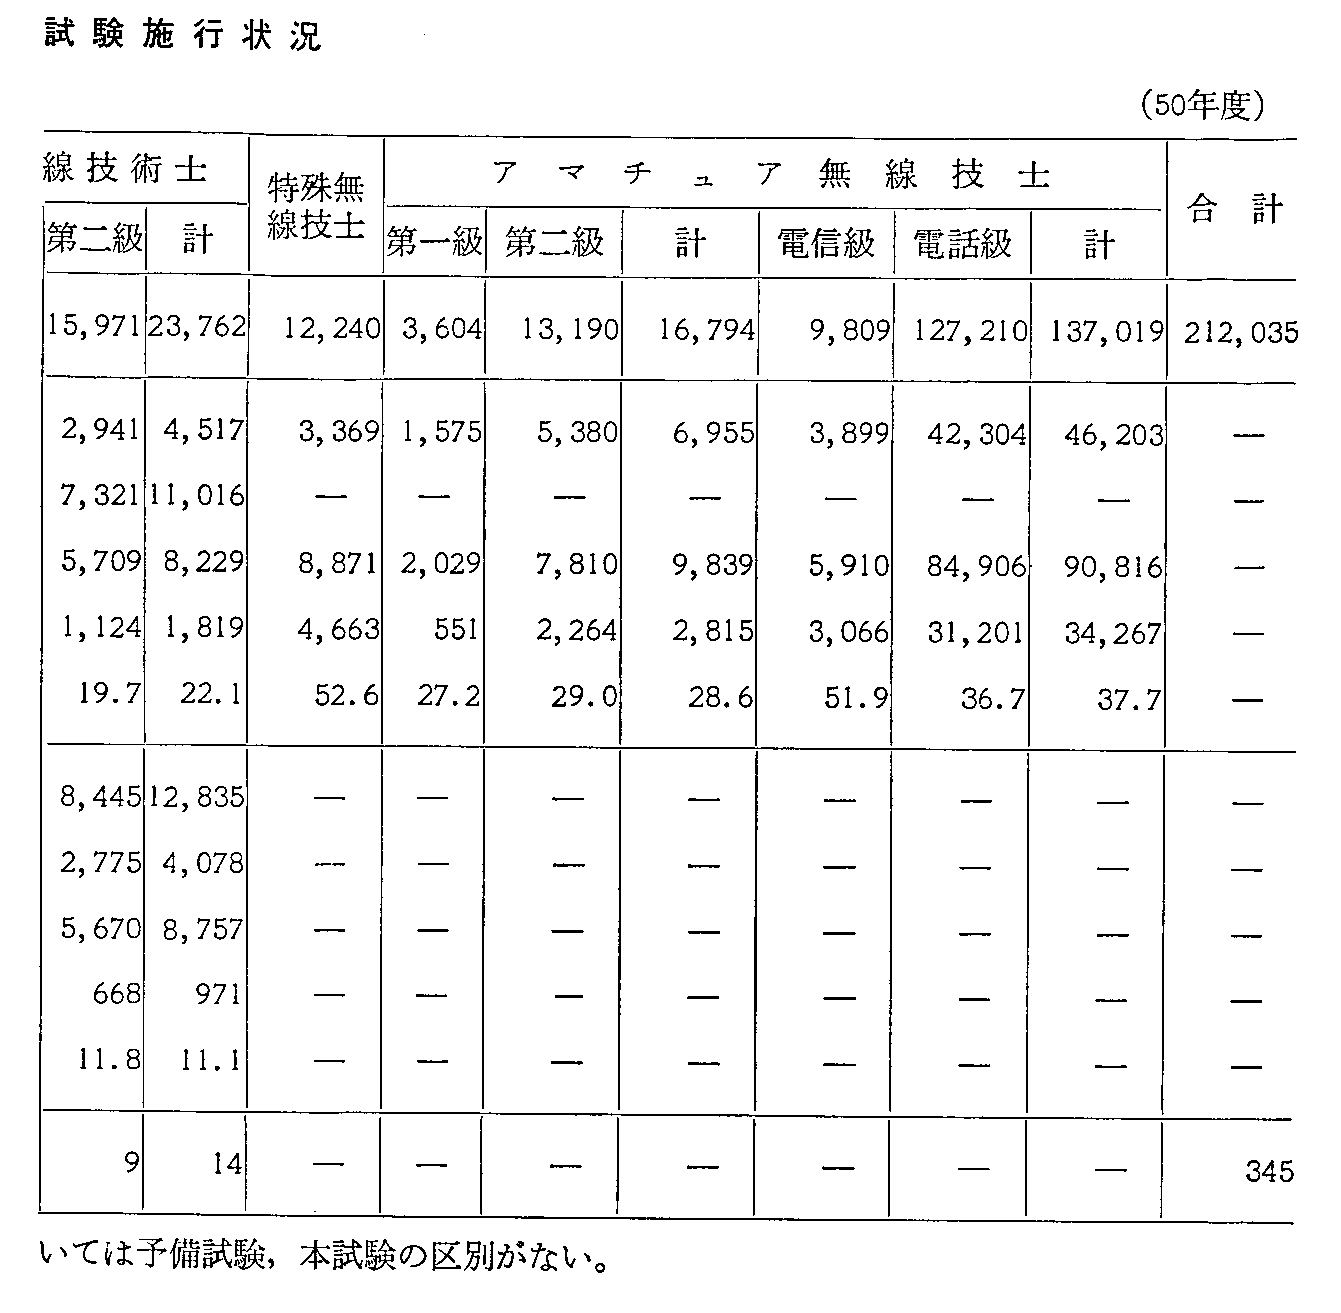 2-6-20\ ]ҍƎ{s(50Nx)(2)